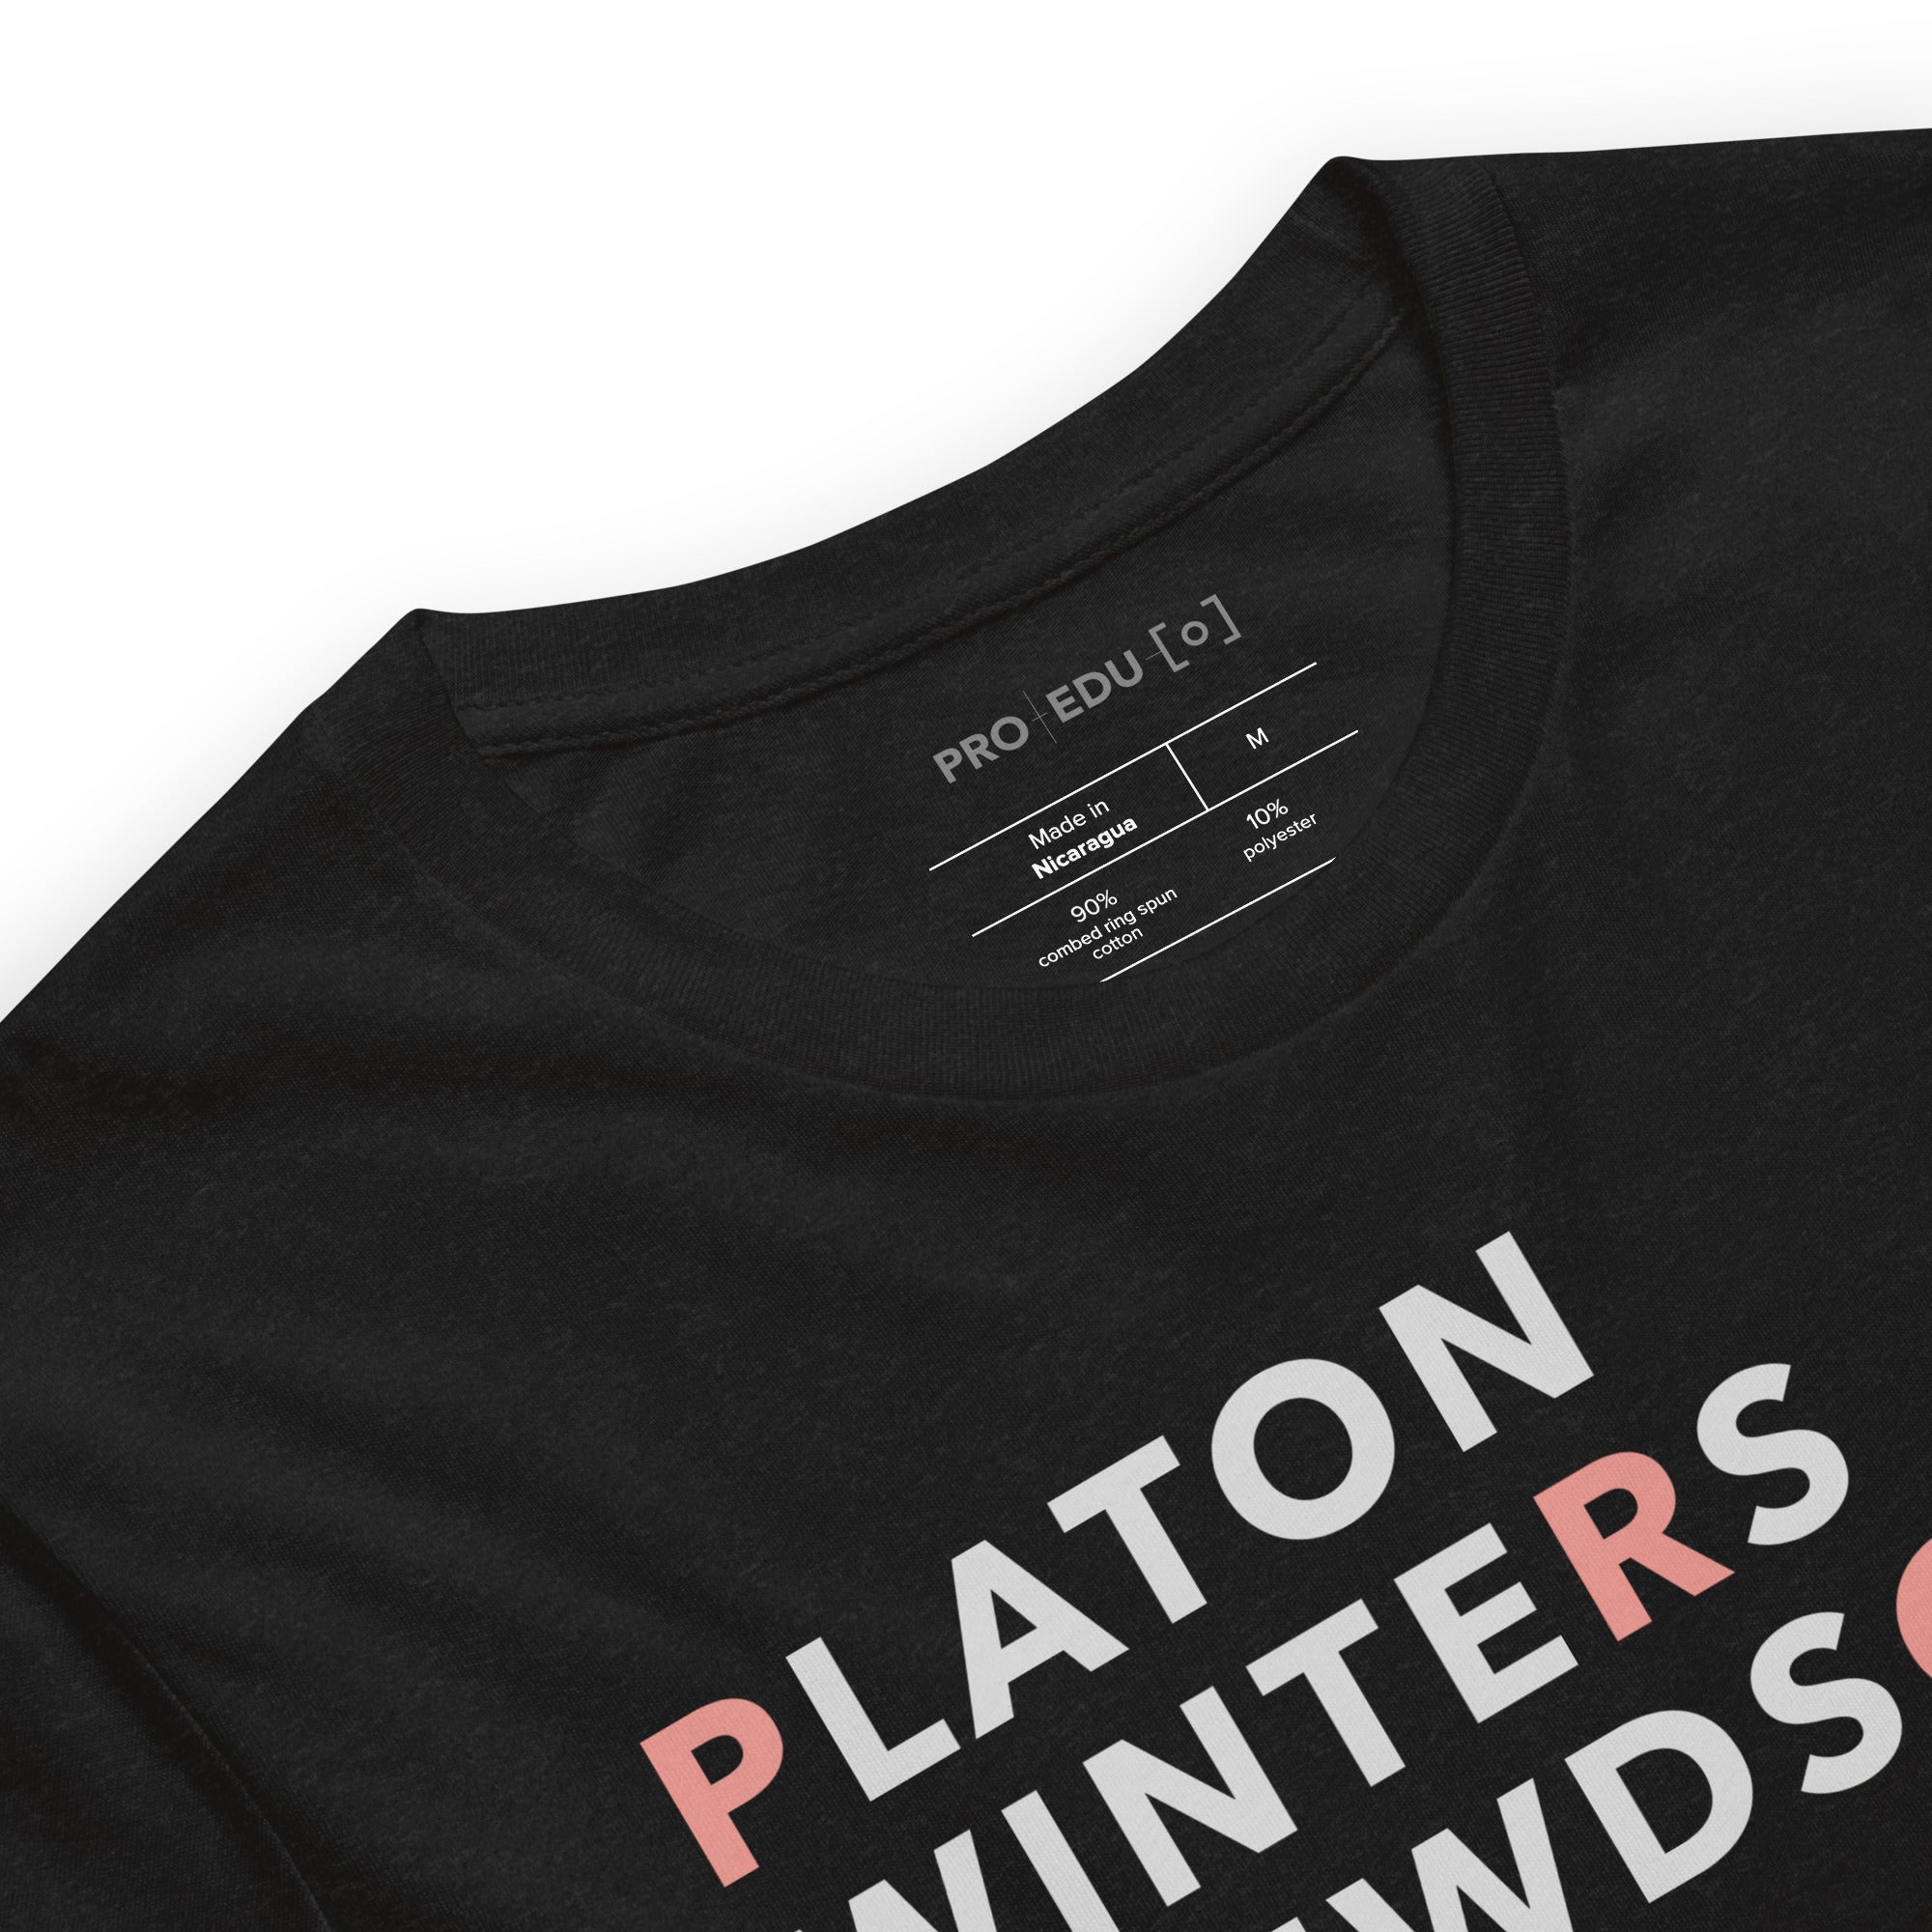 Platon Winters Crewdson [o] PRO EDU Photographer Legends T-Shirt PRO EDU PRO EDU